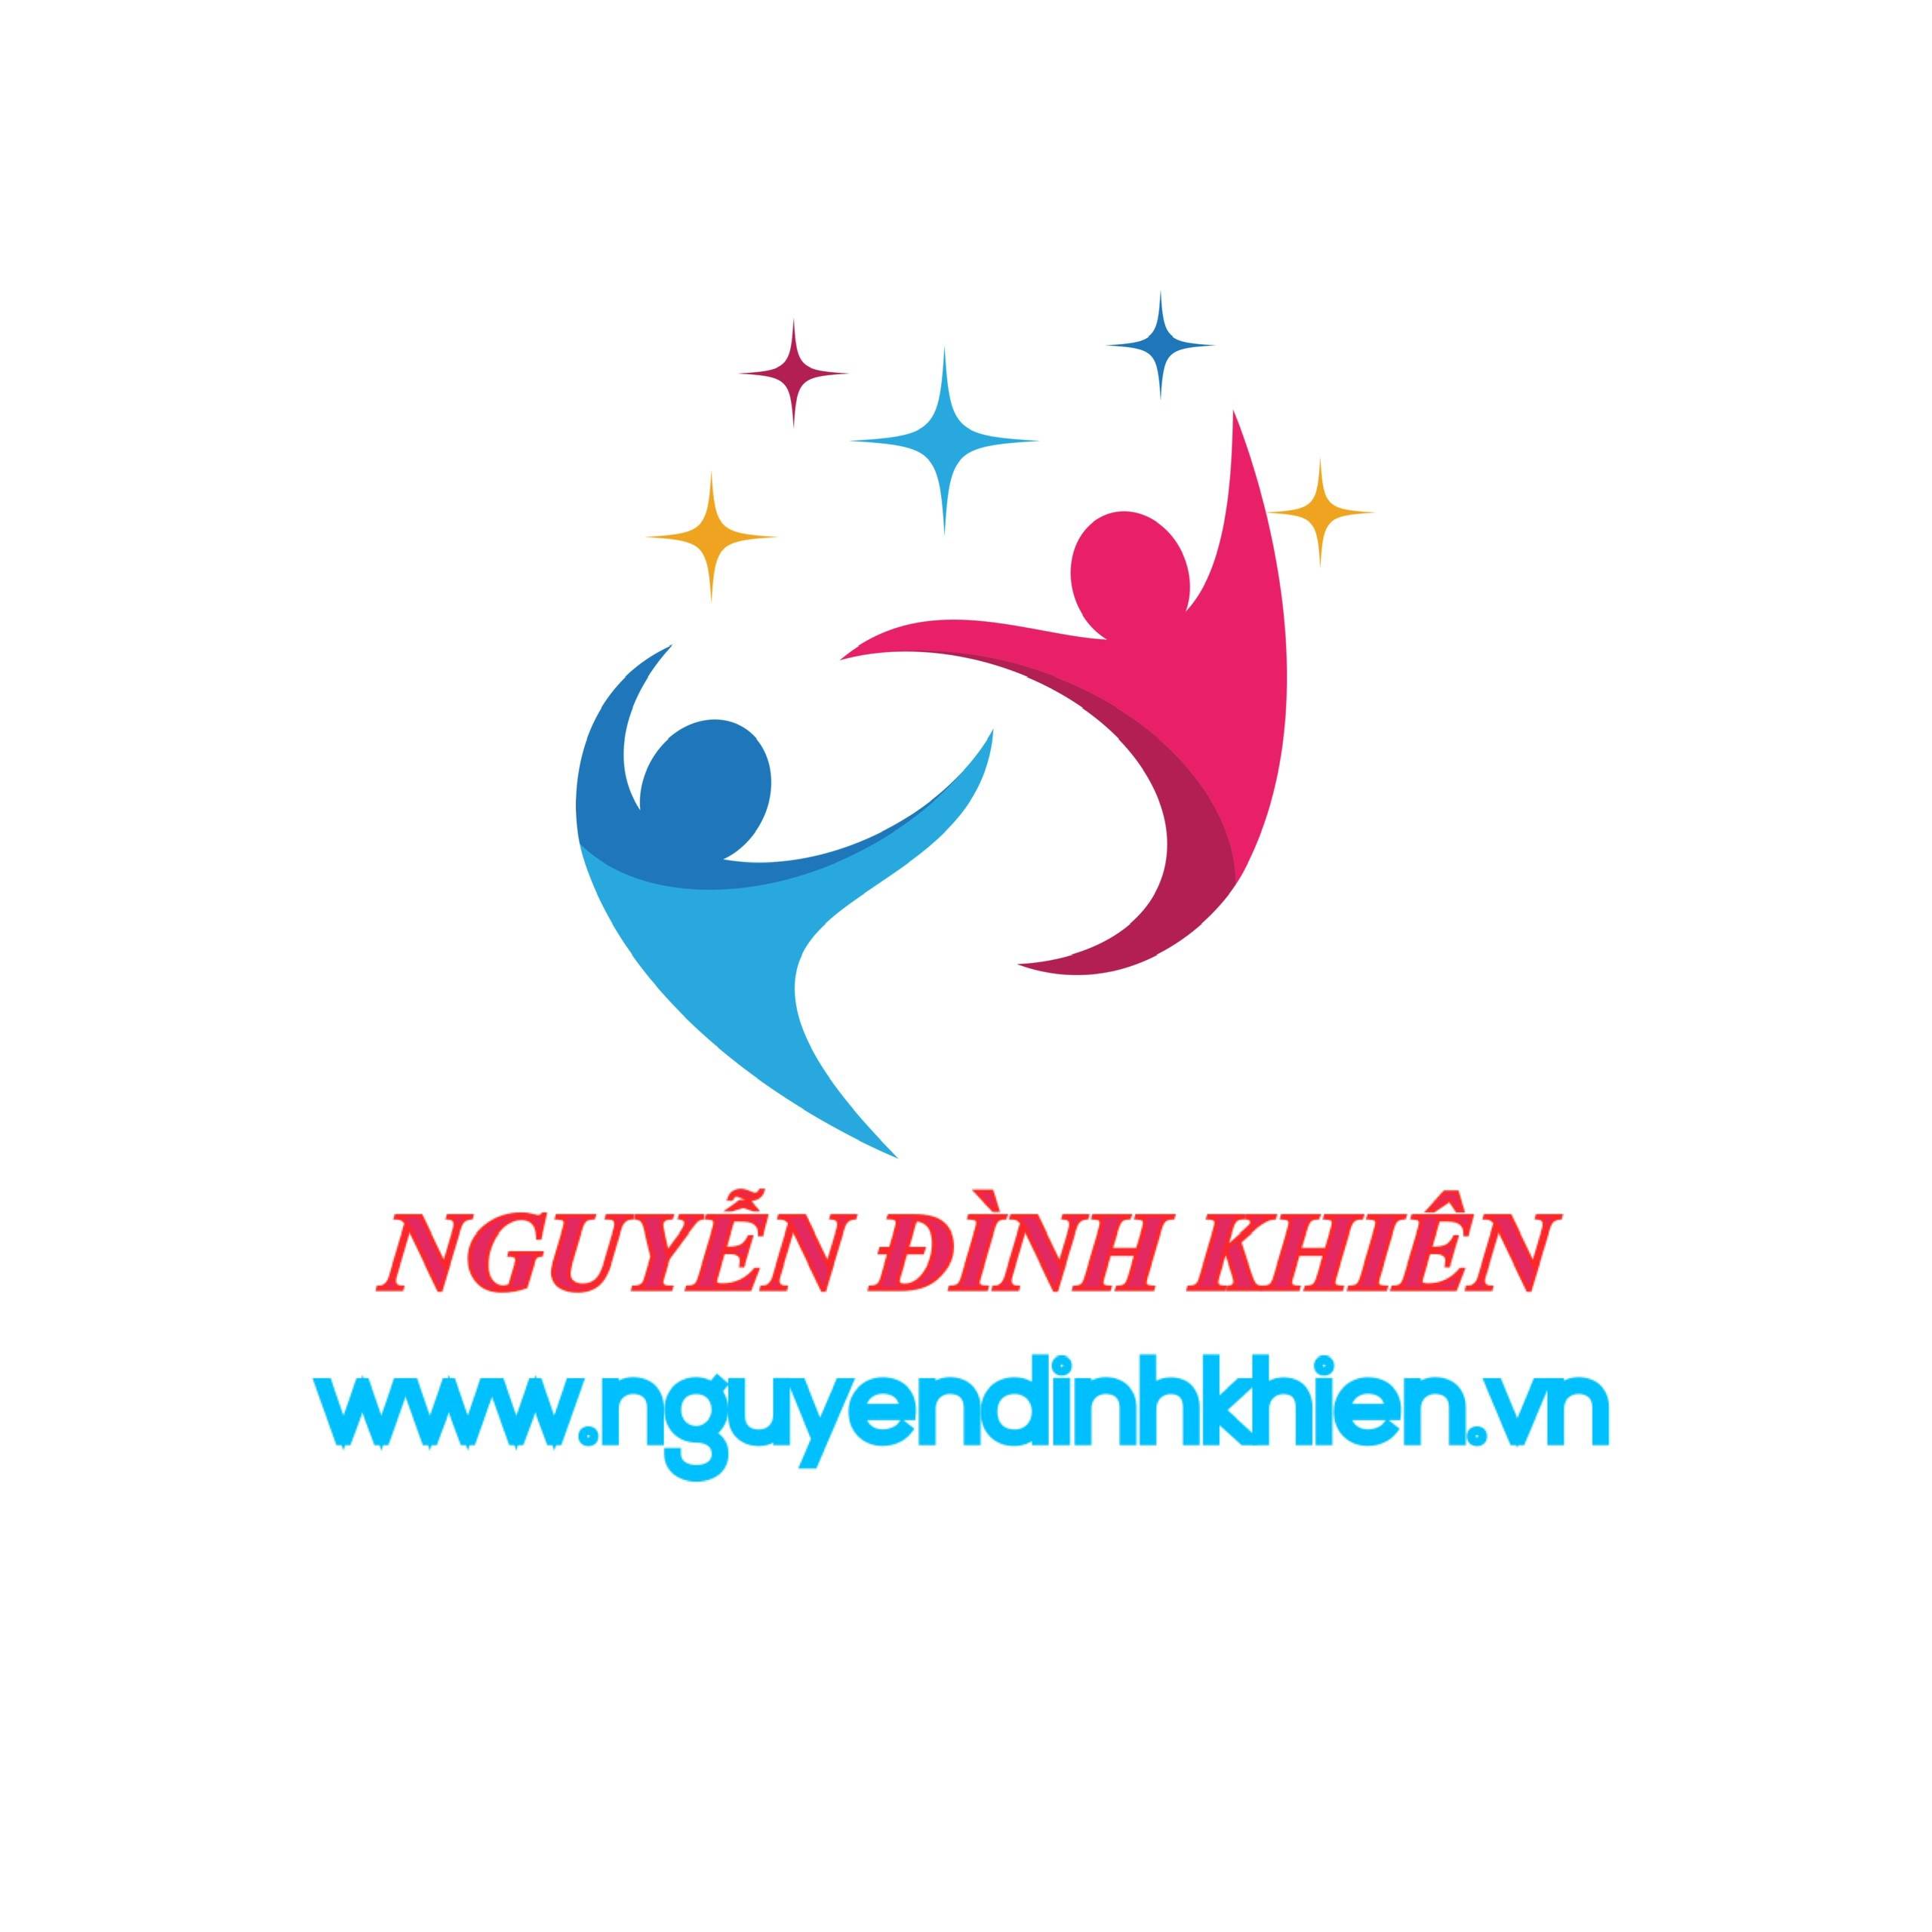 www.nguyendinhkhien.vn